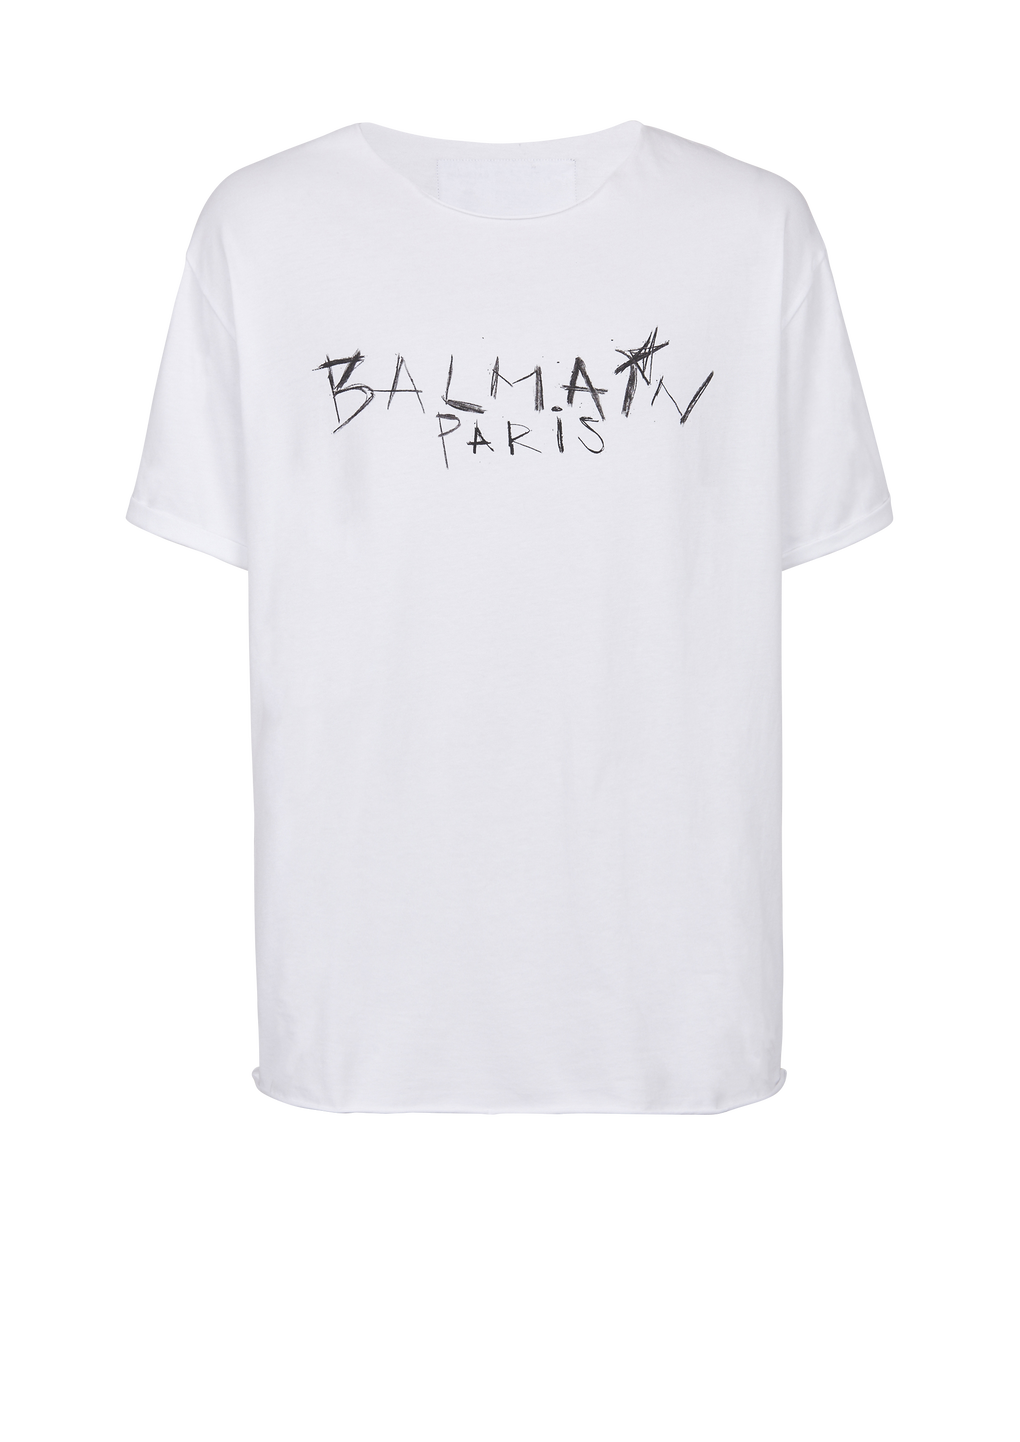 Balmain Paris 그래피티 로고 프린트 디테일 코튼 티셔츠, 흰색, hi-res